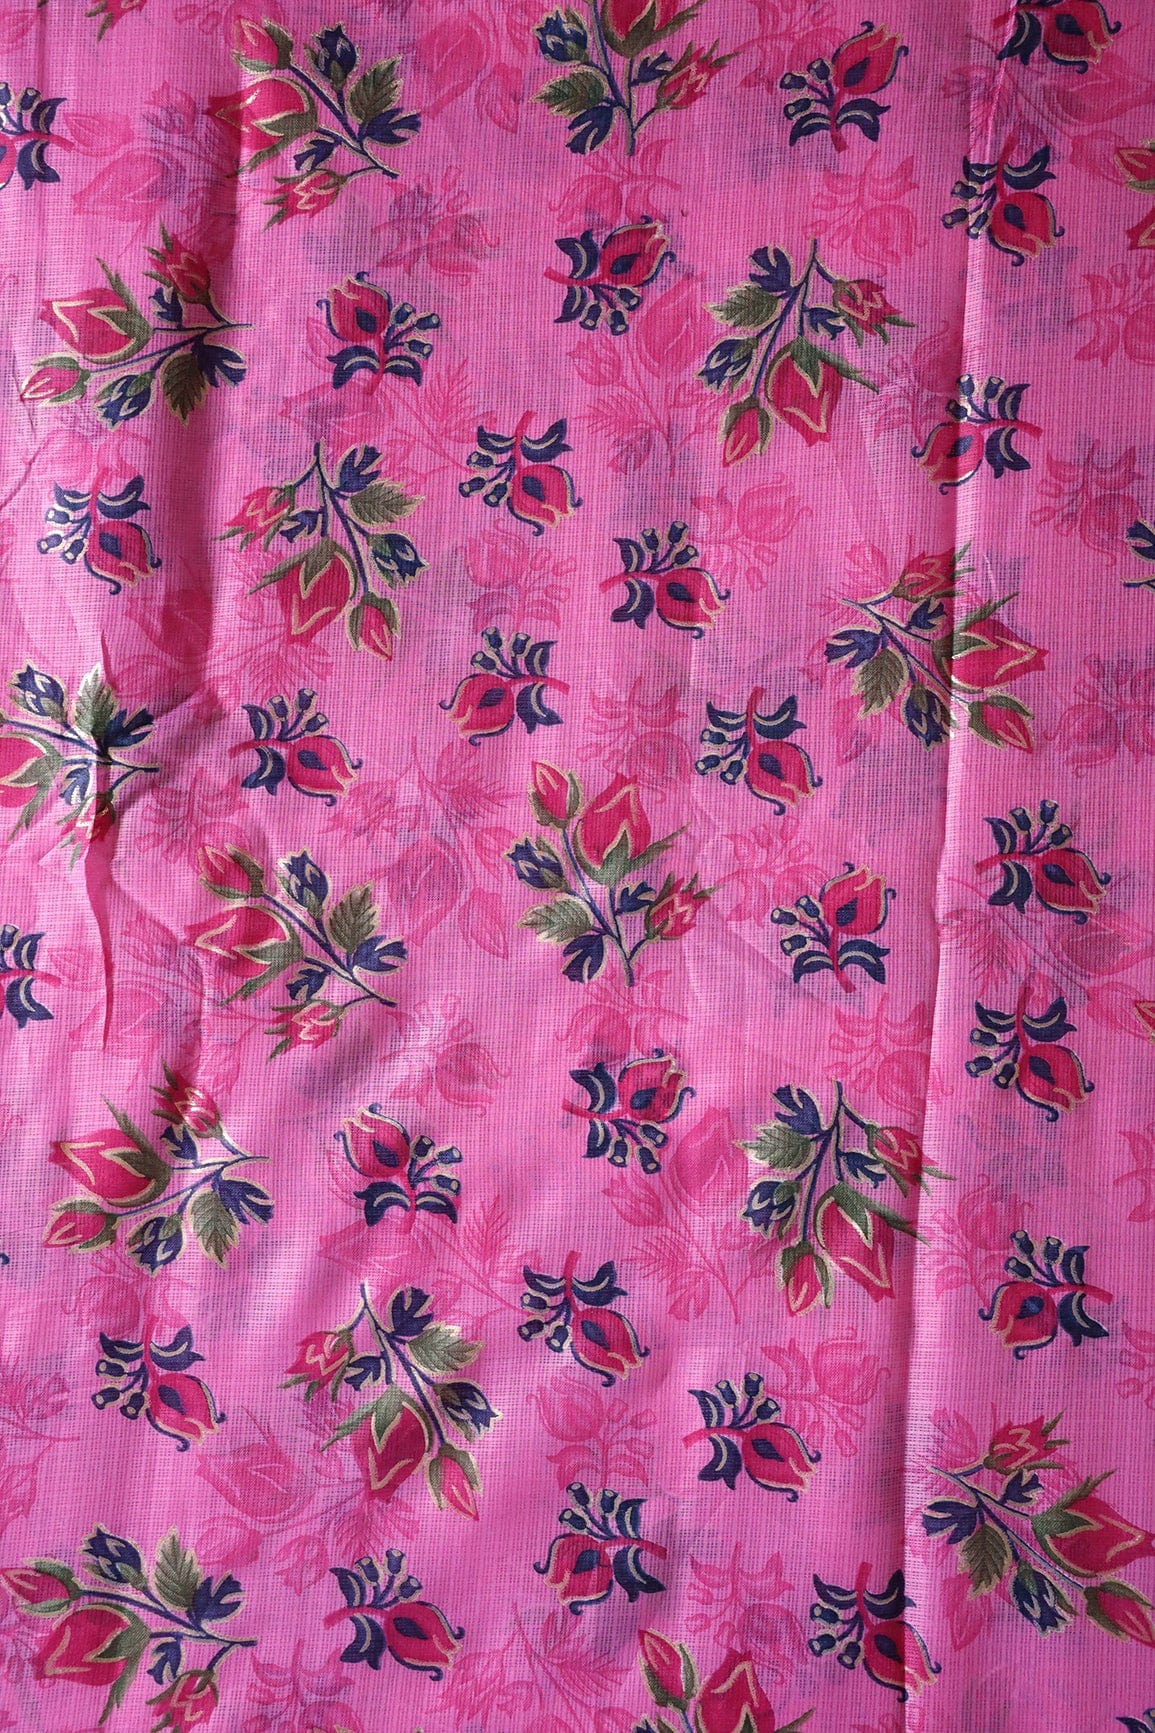 doeraa Prints Pink And Green Floral Pattern Foil Print On Dark Pink Kota Doria Fabric